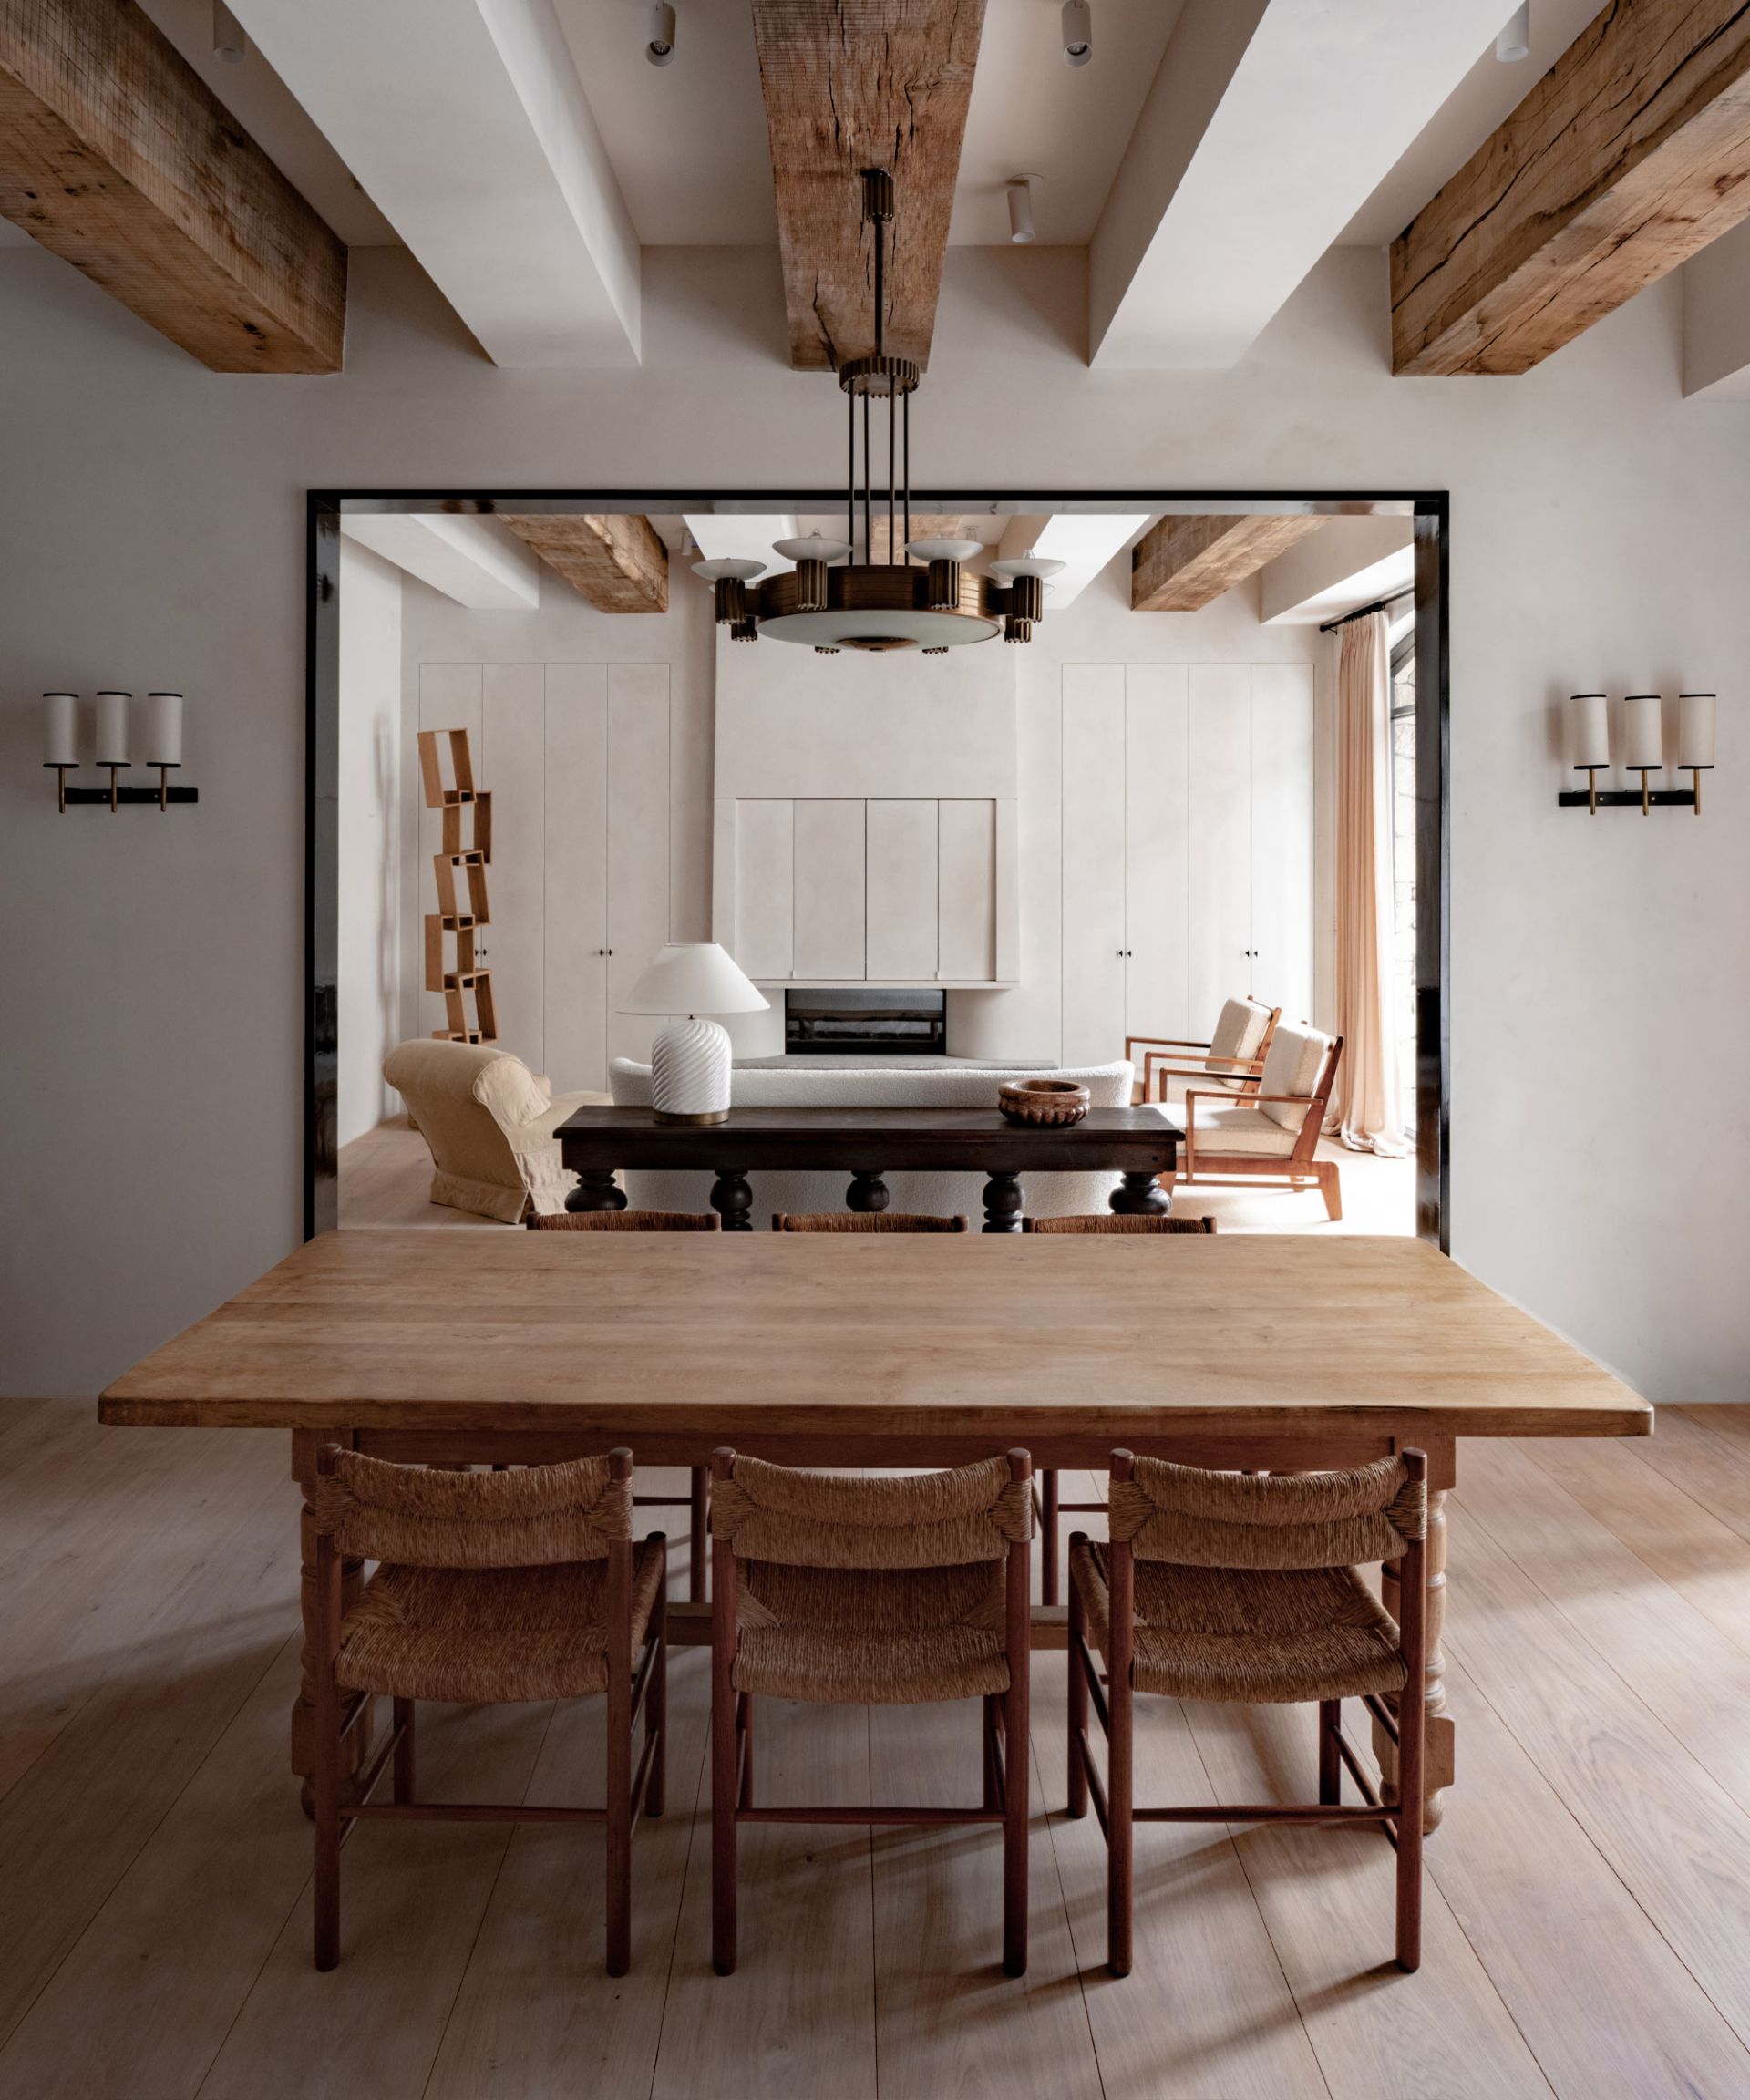 Farmhouse decor ideas – 27 ways to design a home rich with rustic charm